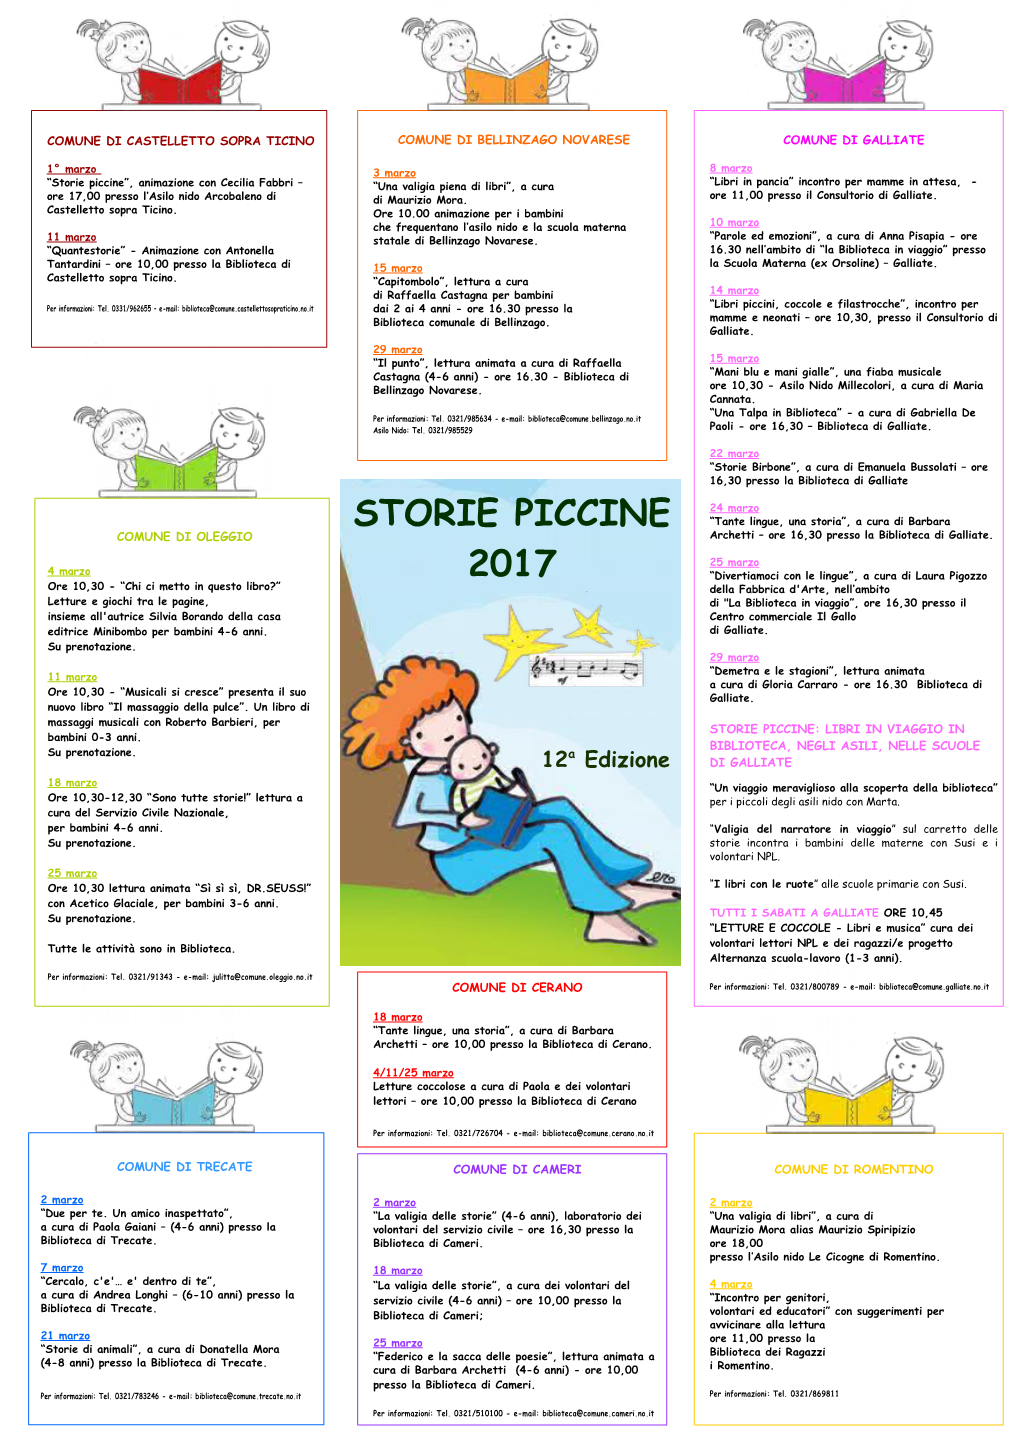 Storie Piccine 2017